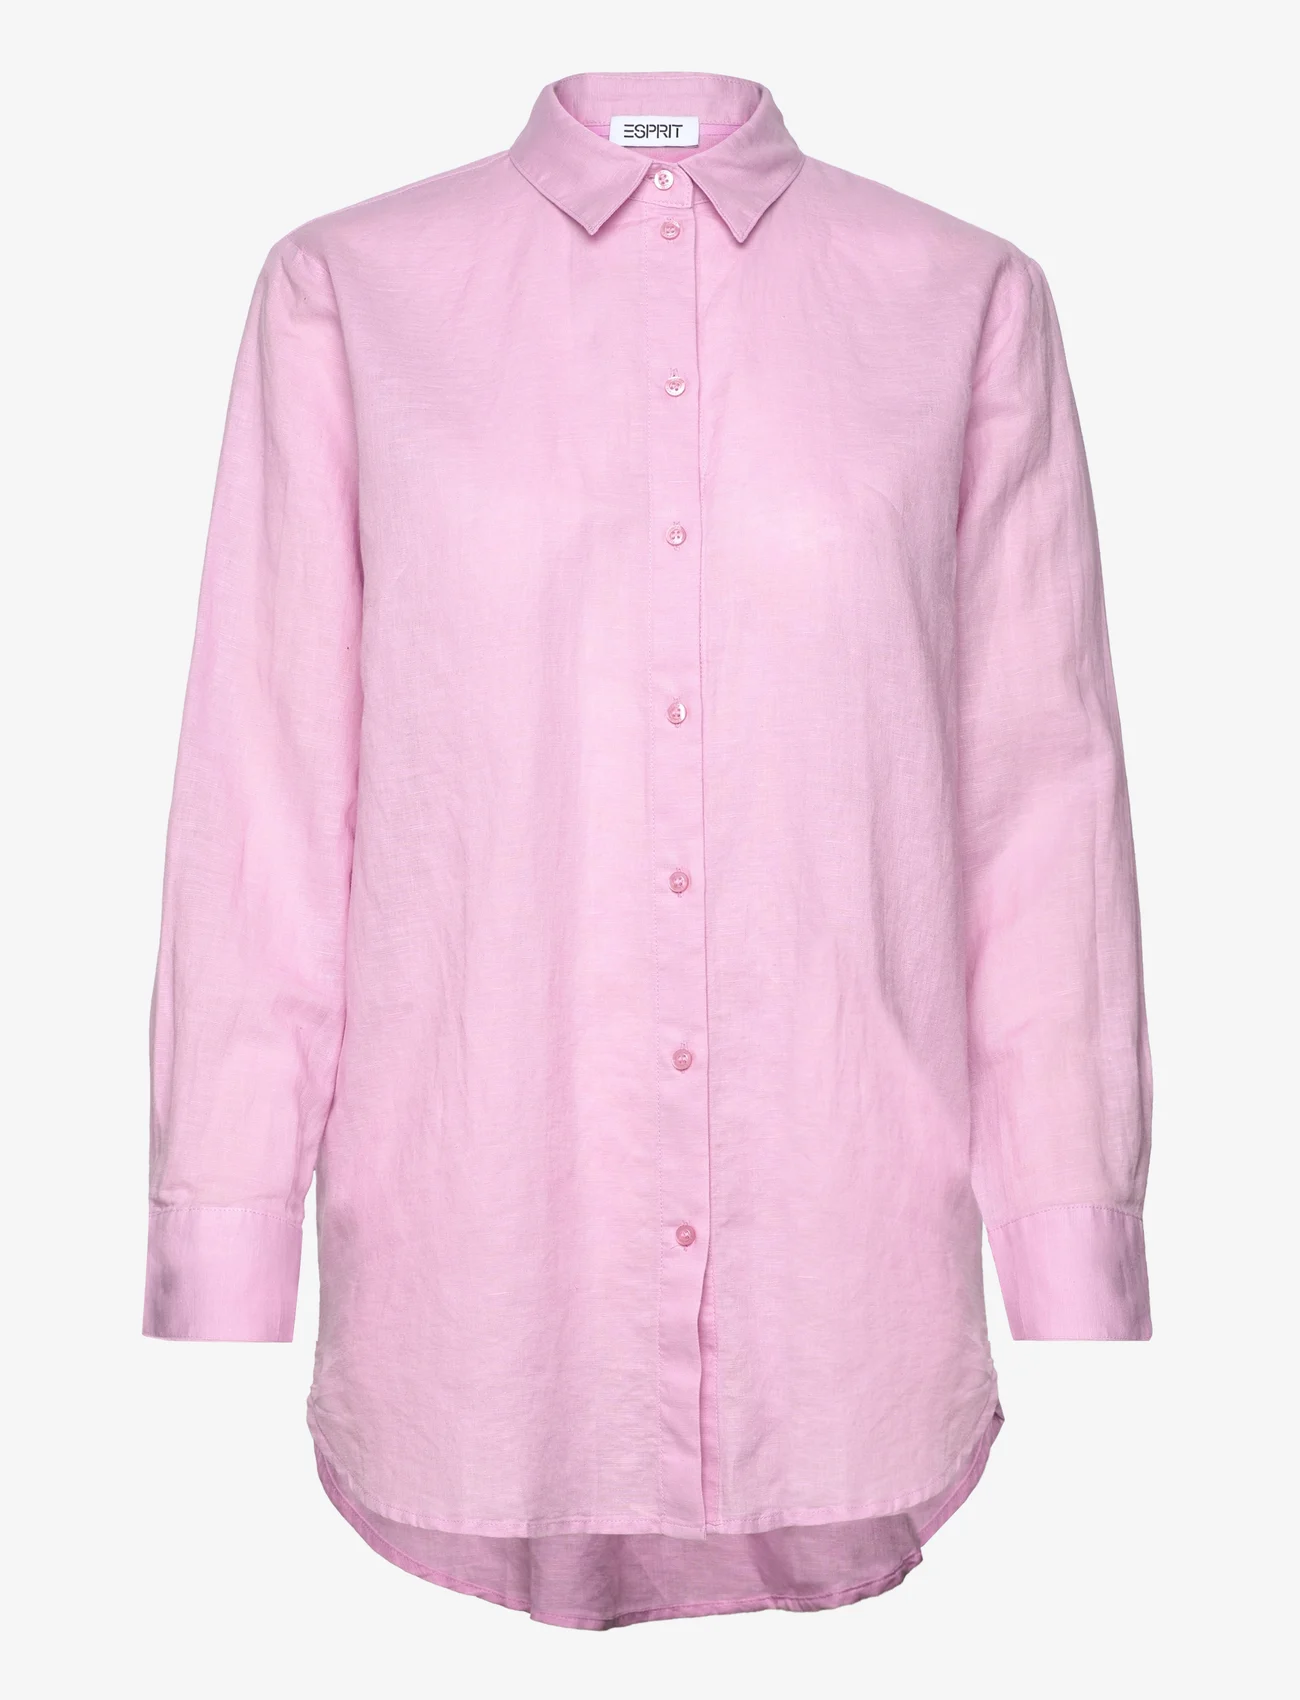 Esprit Casual - Blouses woven - linneskjortor - pink - 0